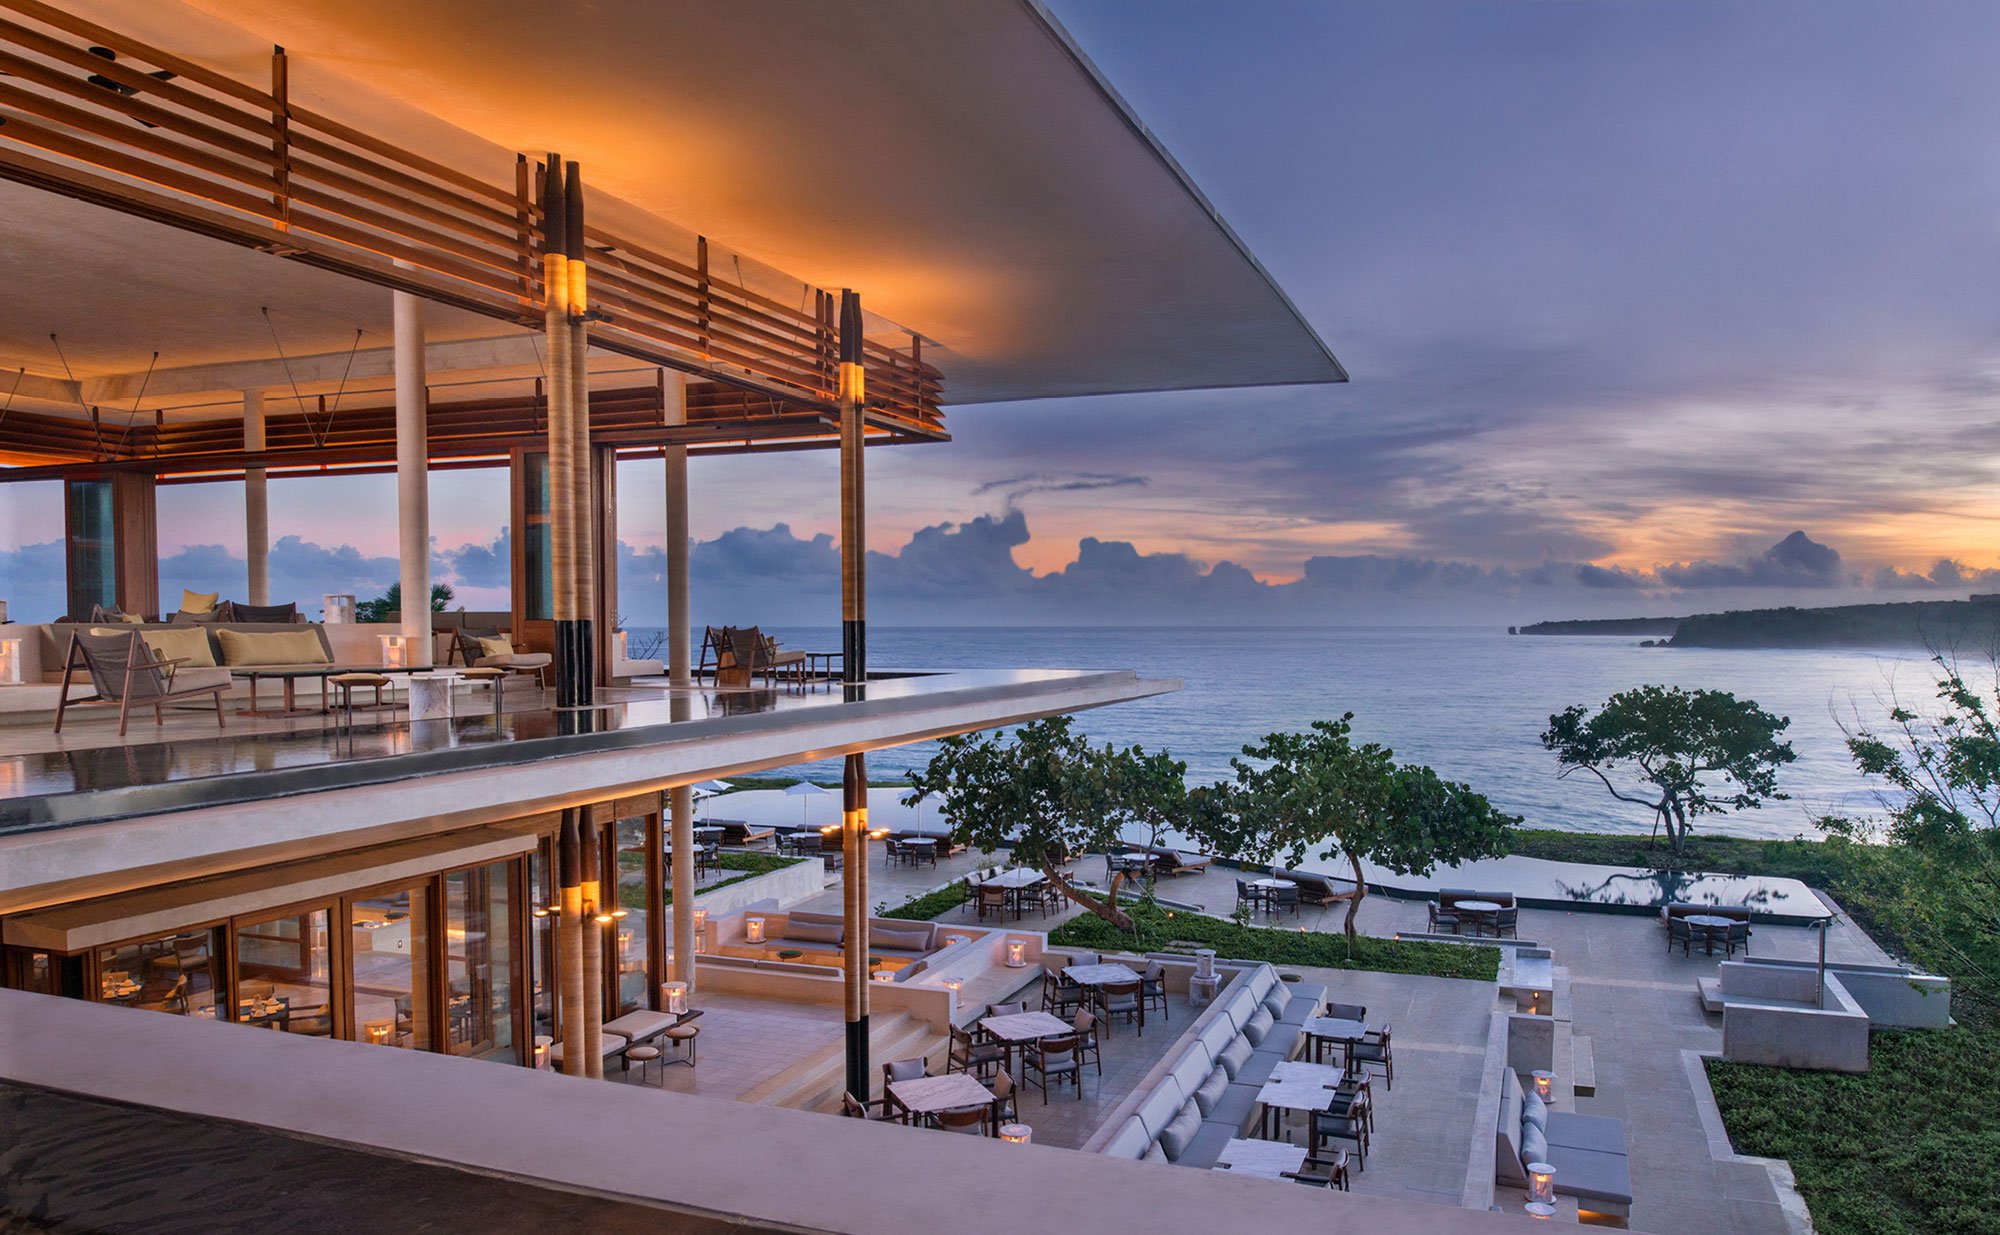 Amanera - Luxury Resort in Playa Grande, Dominican Republic - Aman